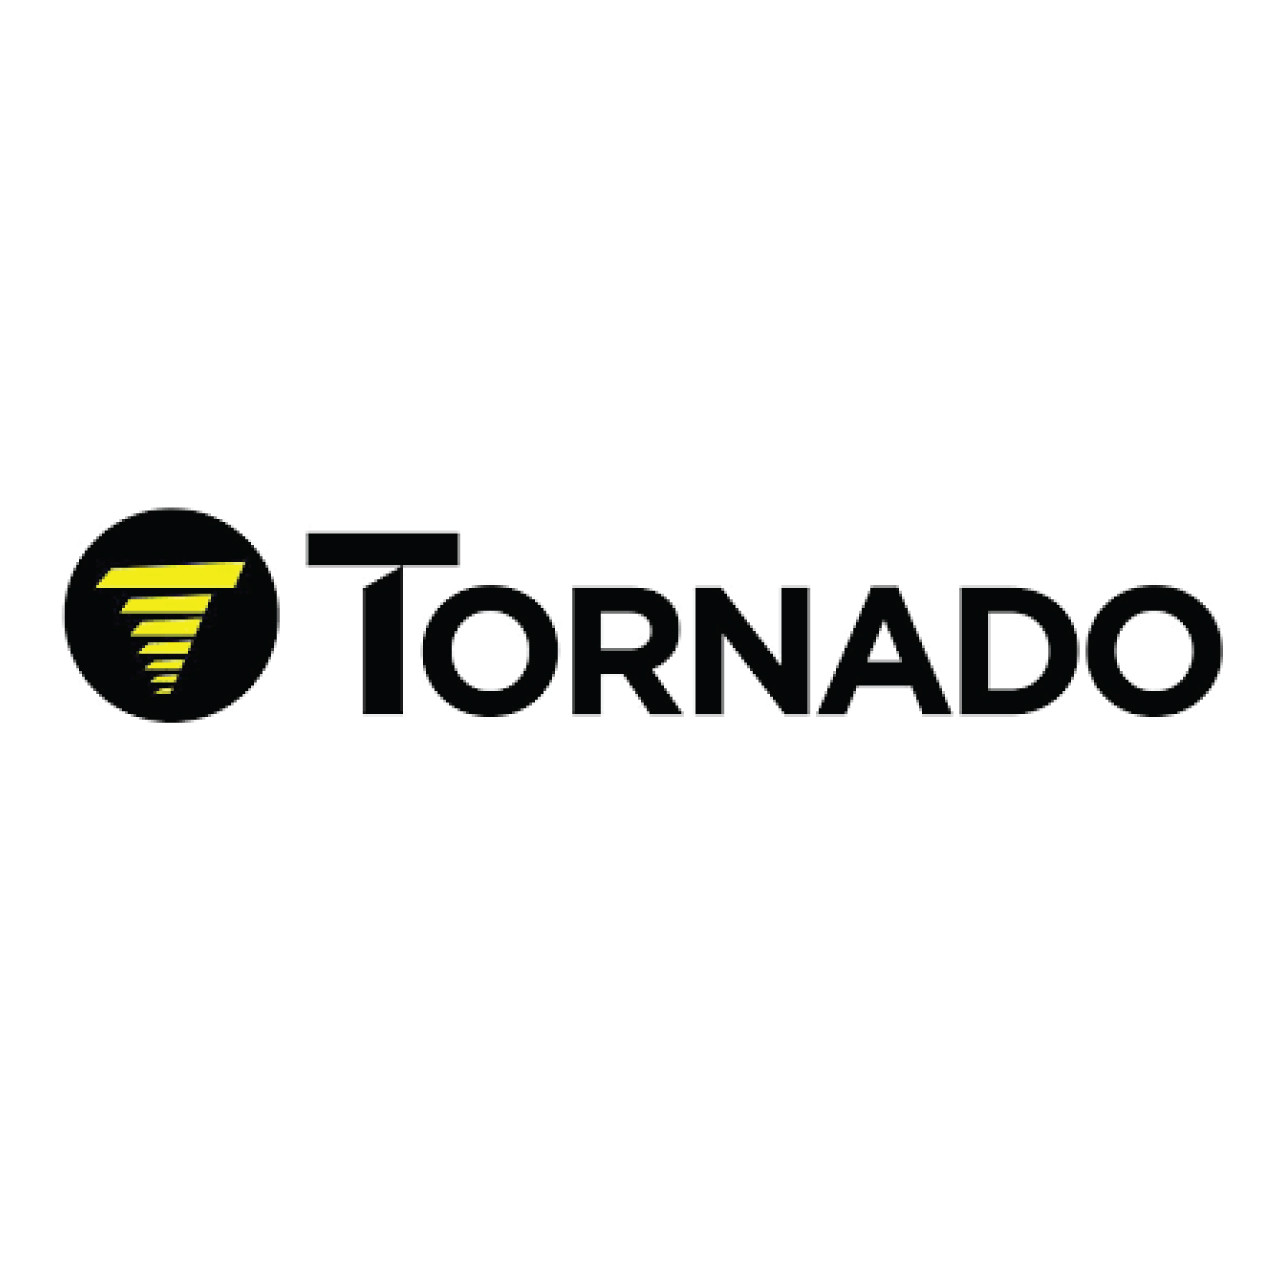 46200250, Tornado 46200250, Tornado TRACTION WHEEL ASSEMBLY 36V 1200W, Tornado parts